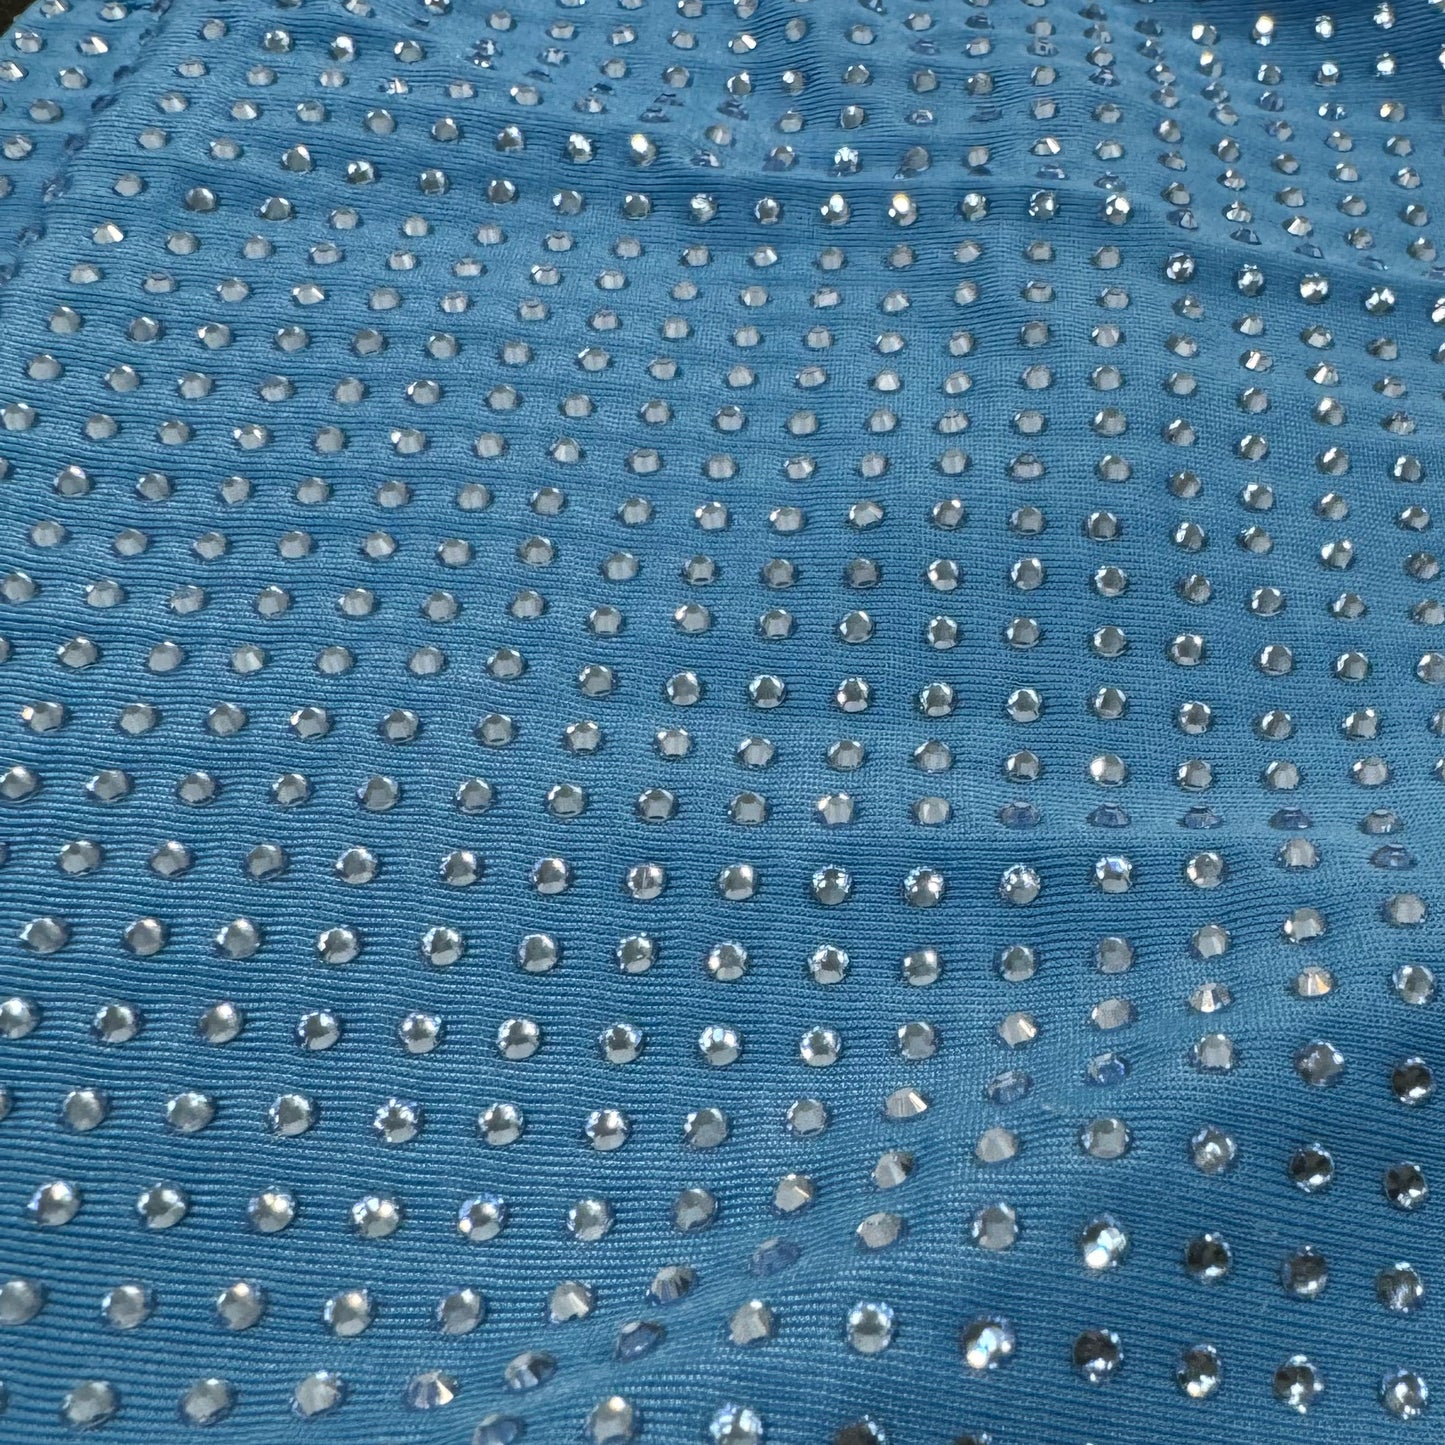 Clear Crystals on Lt. Blue Fabric Swim Trunks